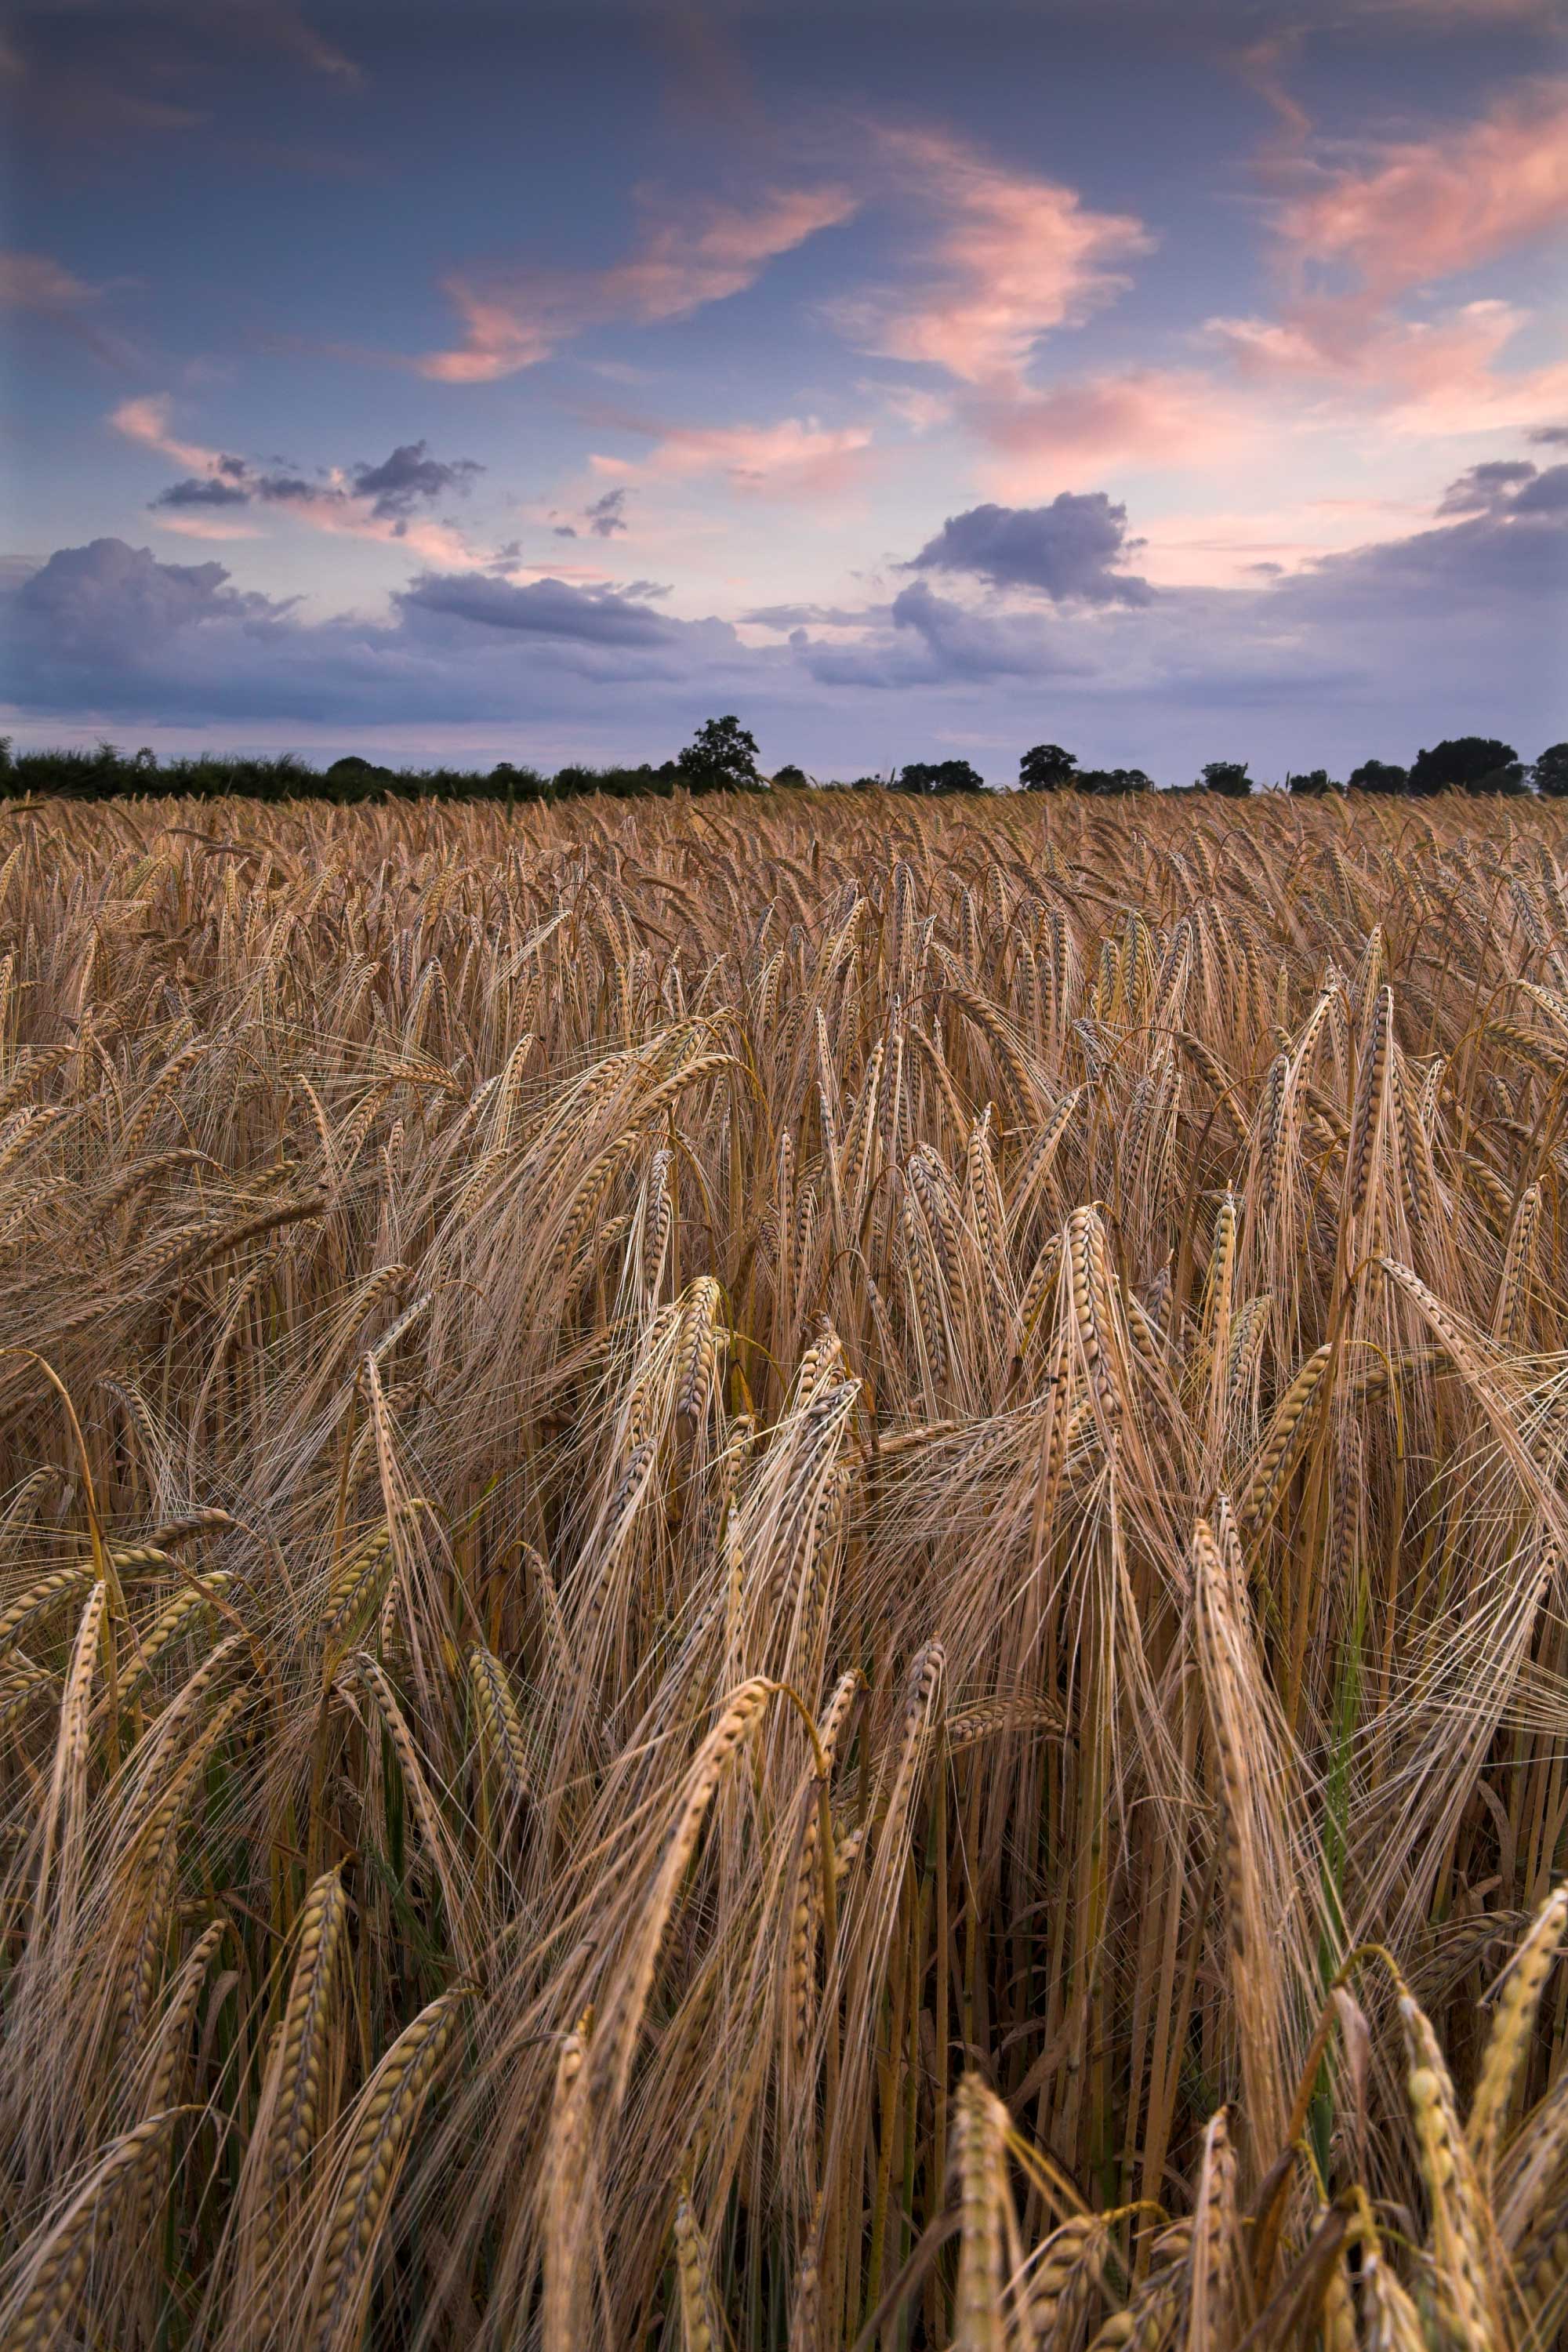 Barley stalks against a sky at dusk.